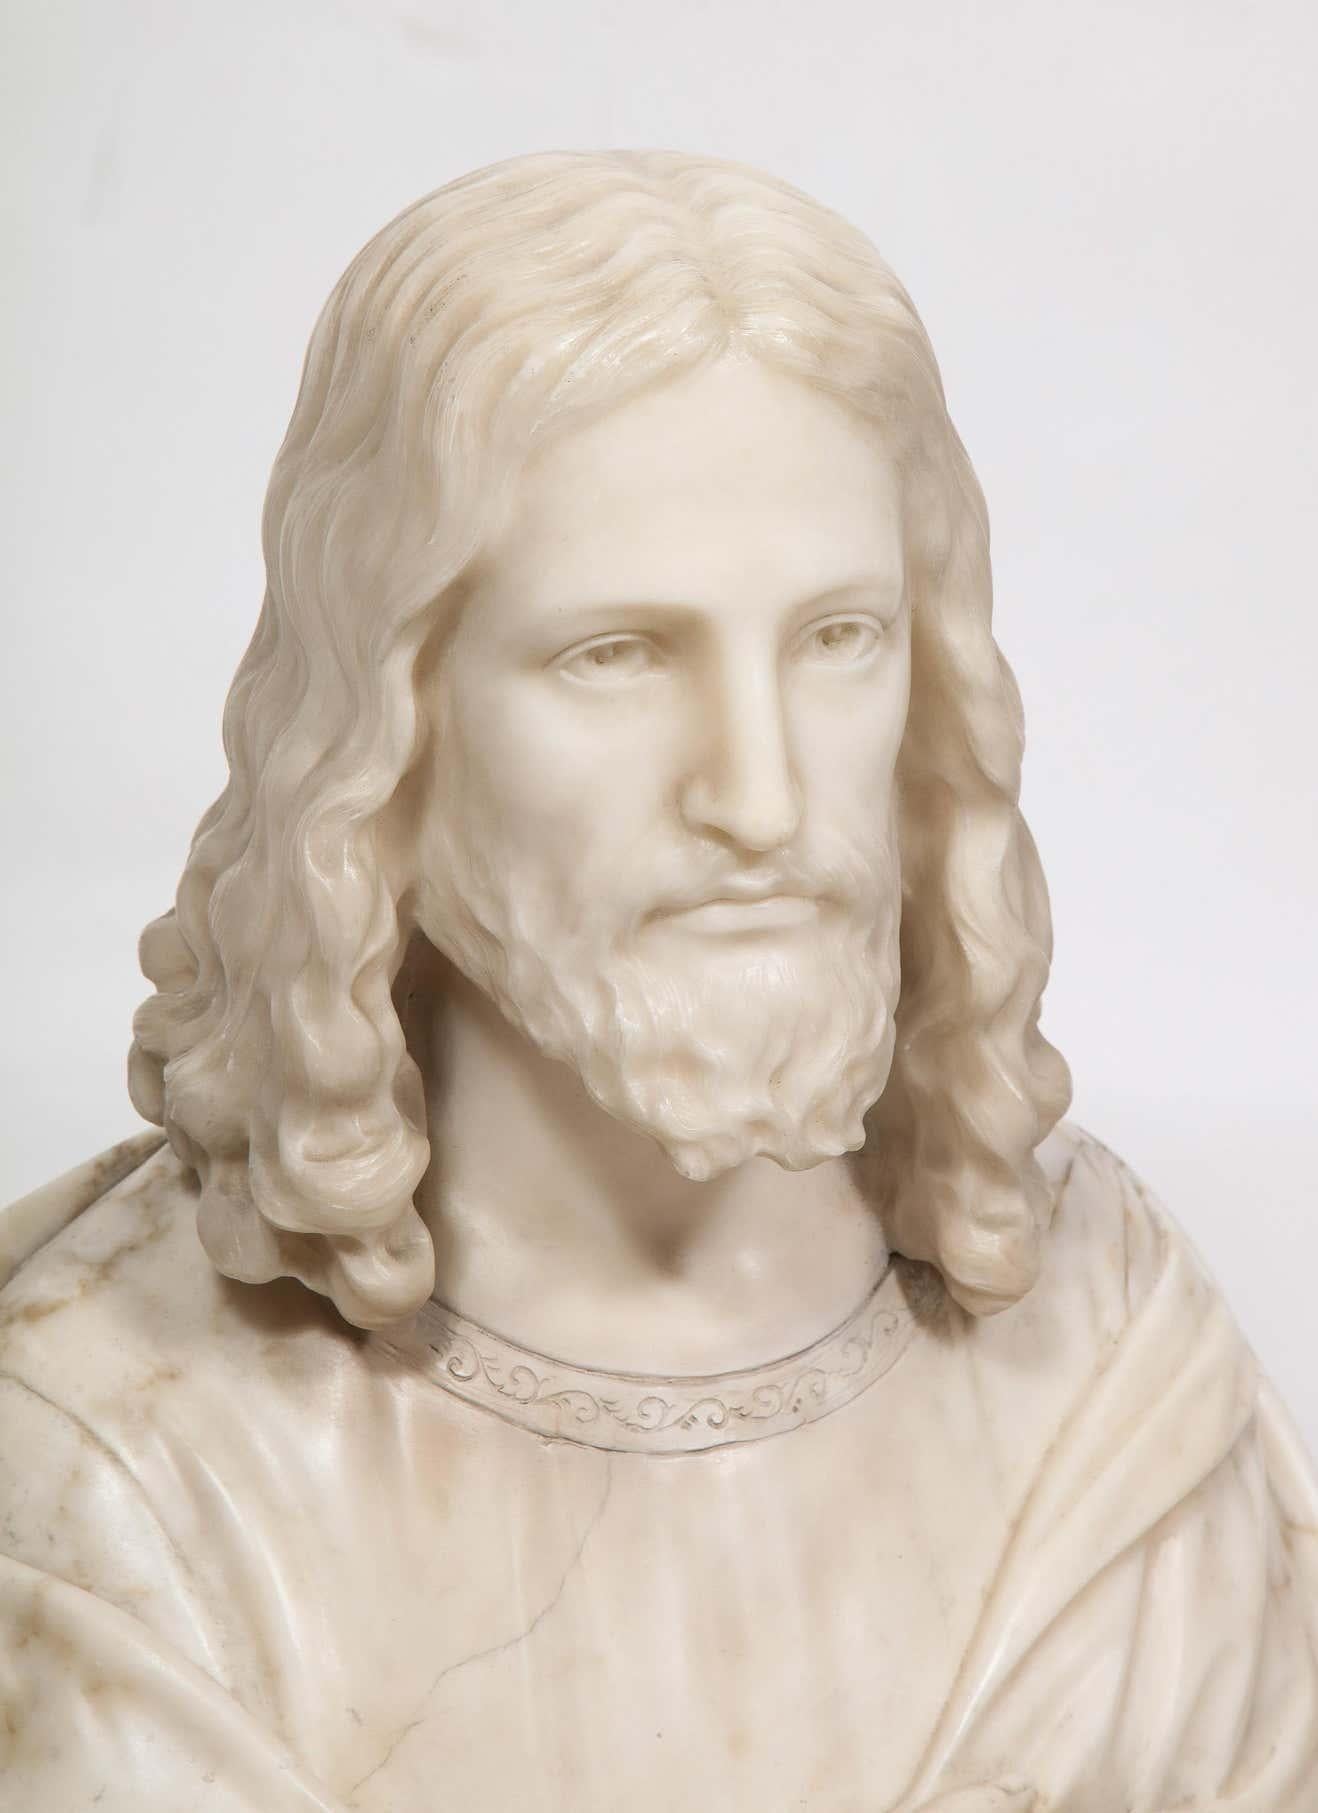 Magnificent 19th Century Italian Alabaster Bust Sculpture of Holy Jesus Christ - Beige Figurative Sculpture by Giovanni Francesco Guerrieri